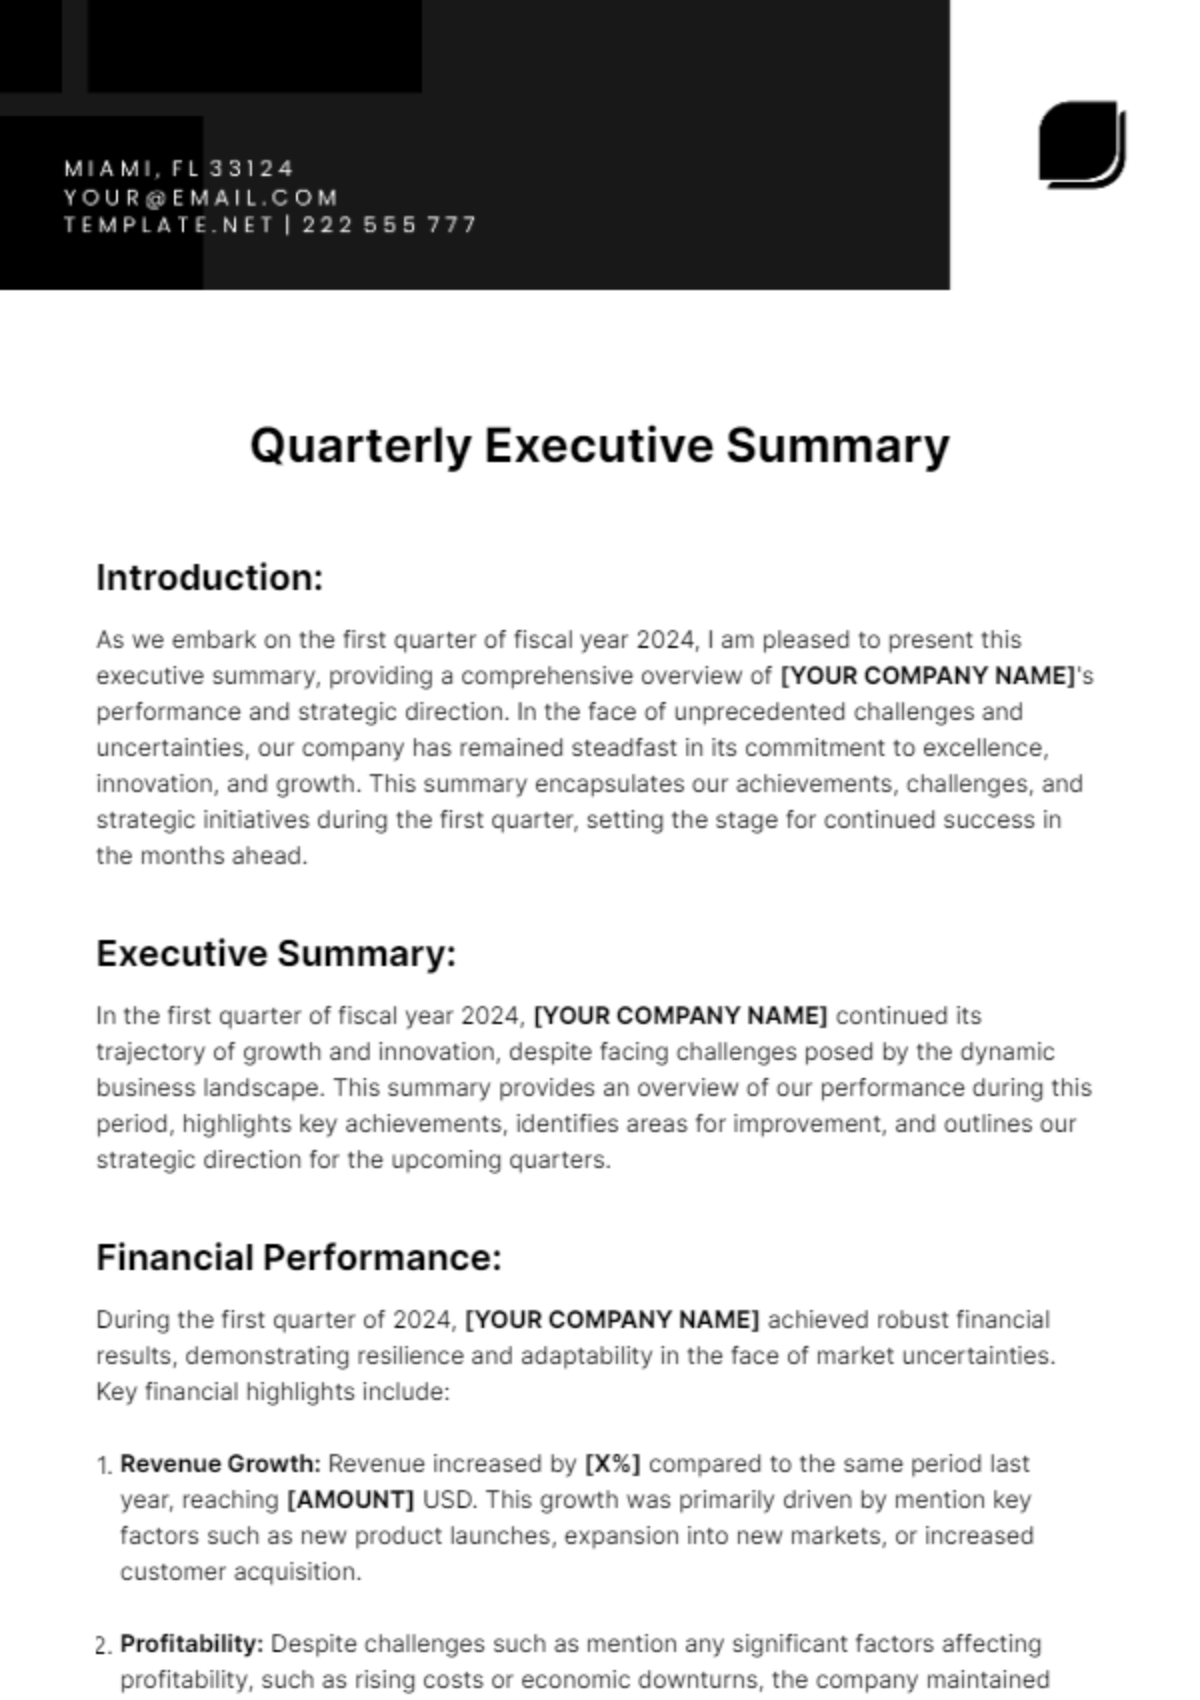 Quarterly Executive Summary Template